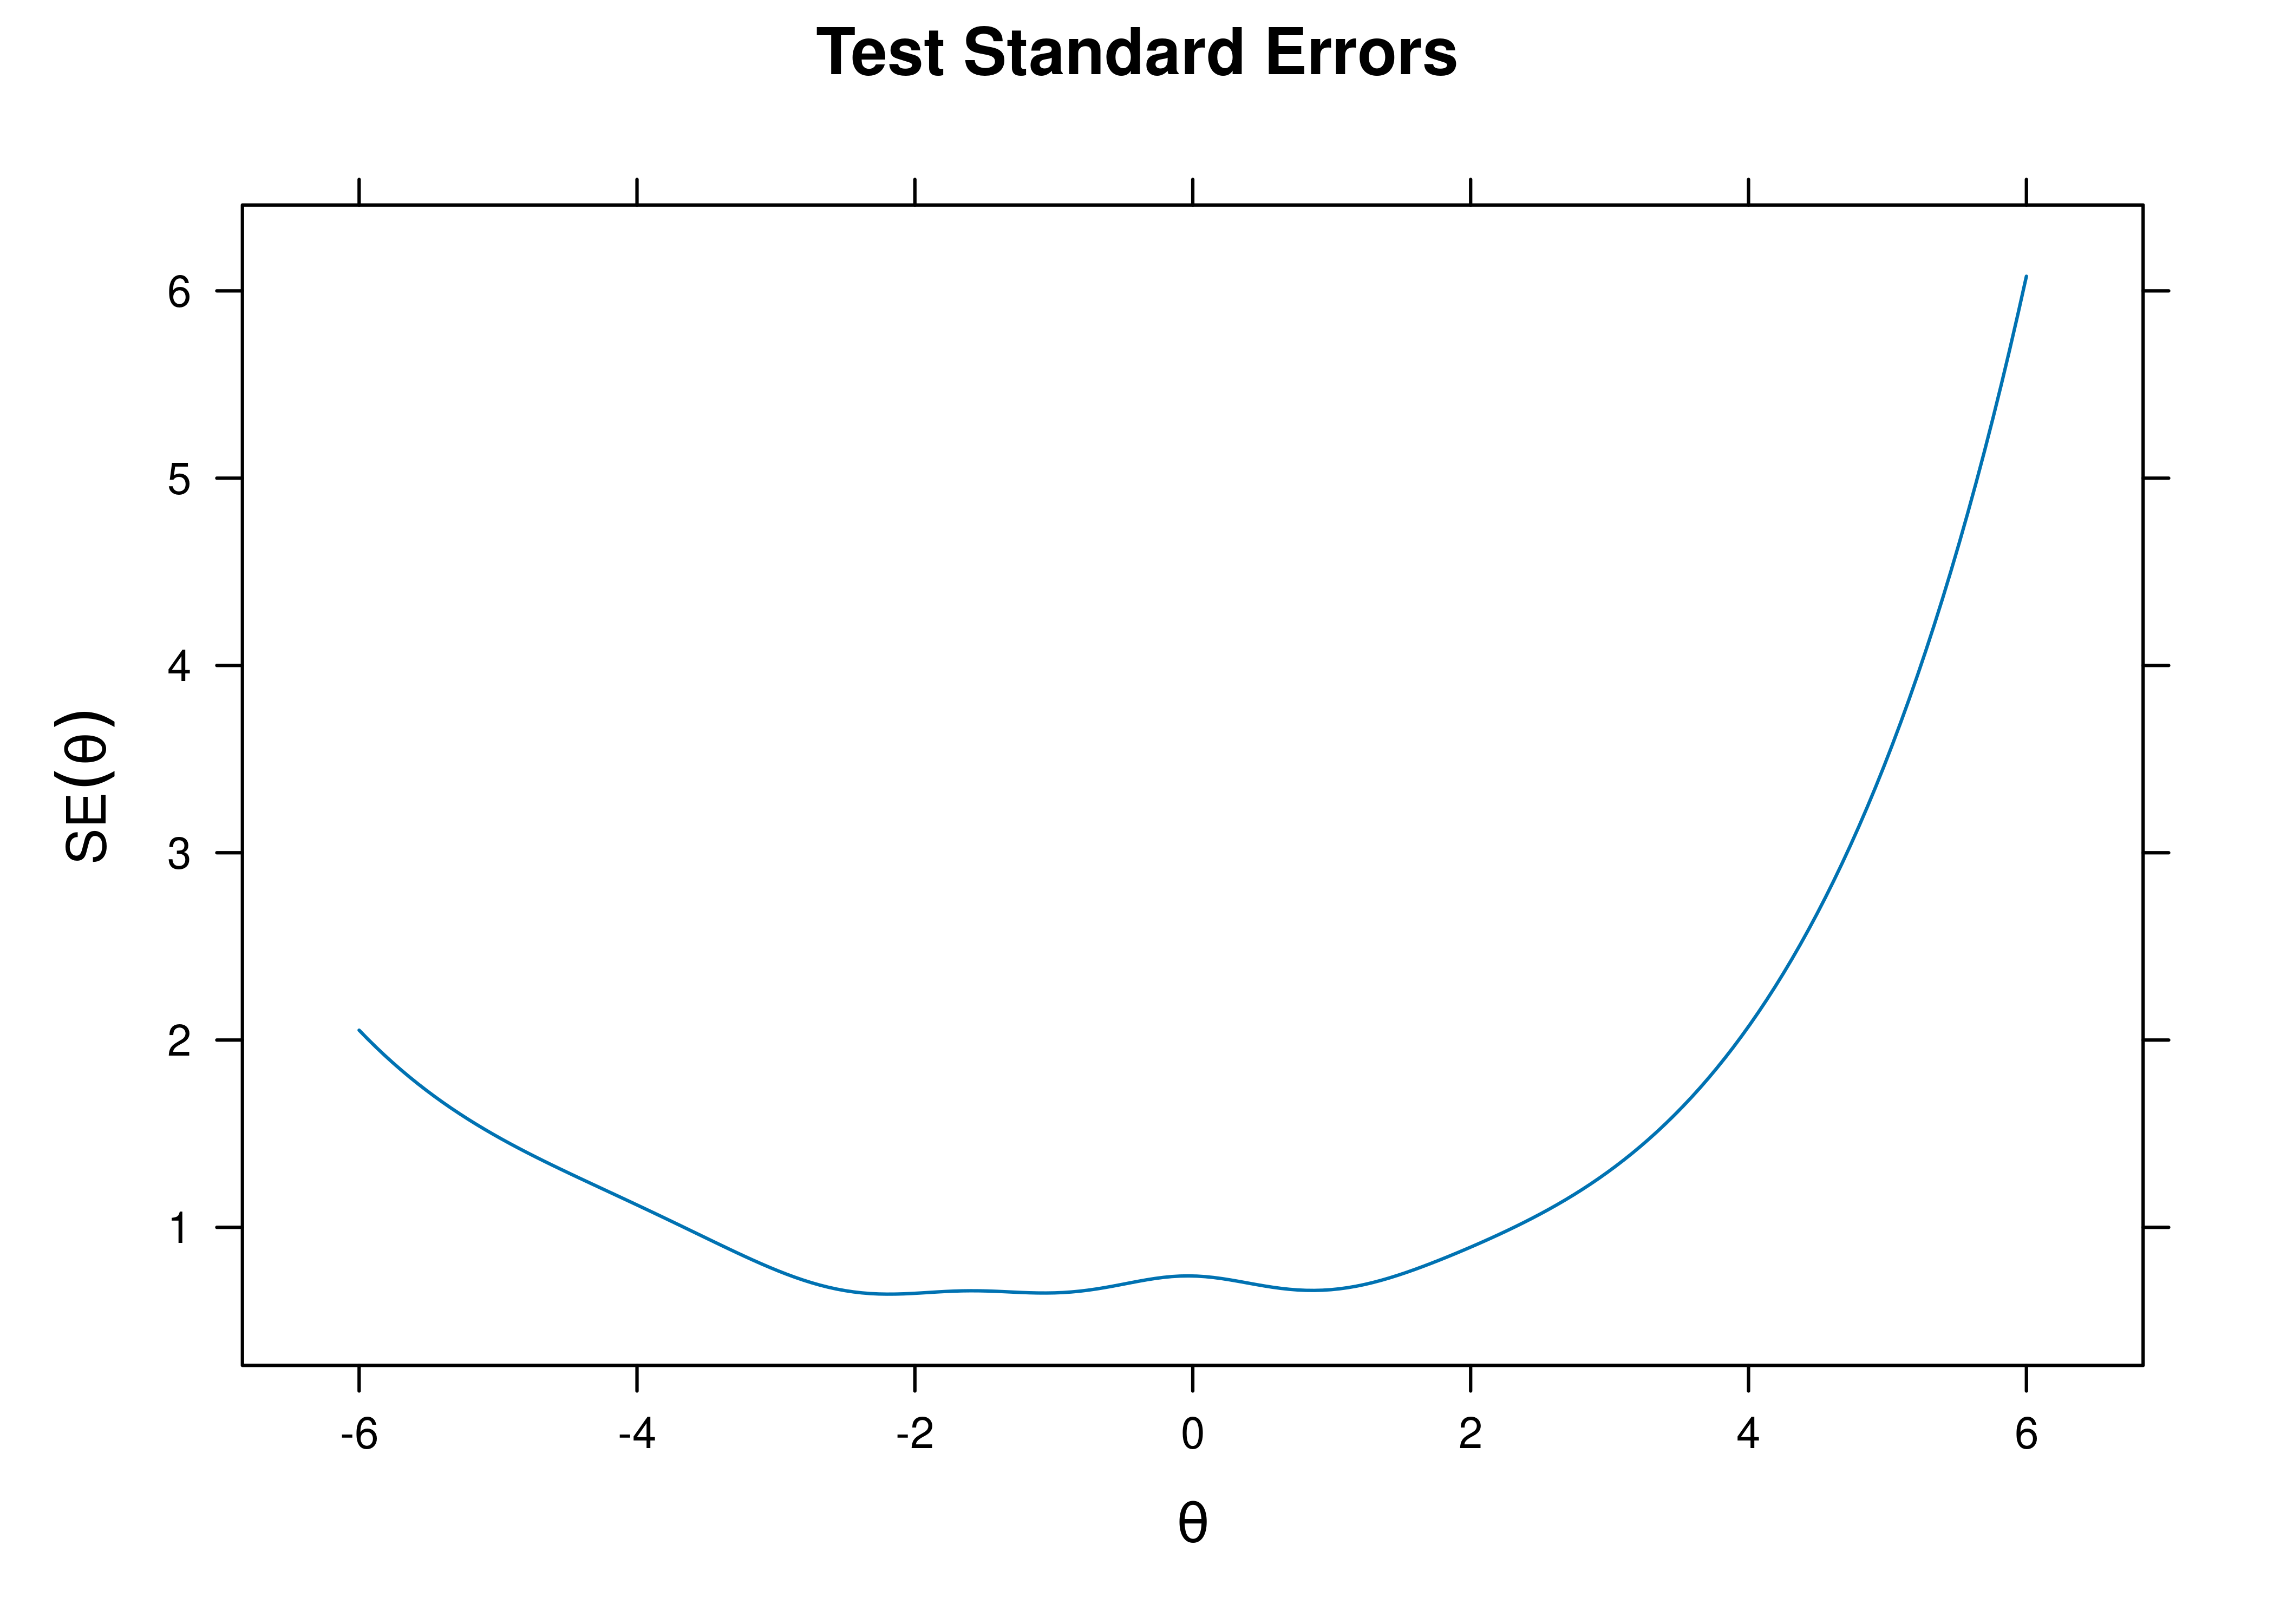 Test Standard Error of Measurement From Graded Response Model.